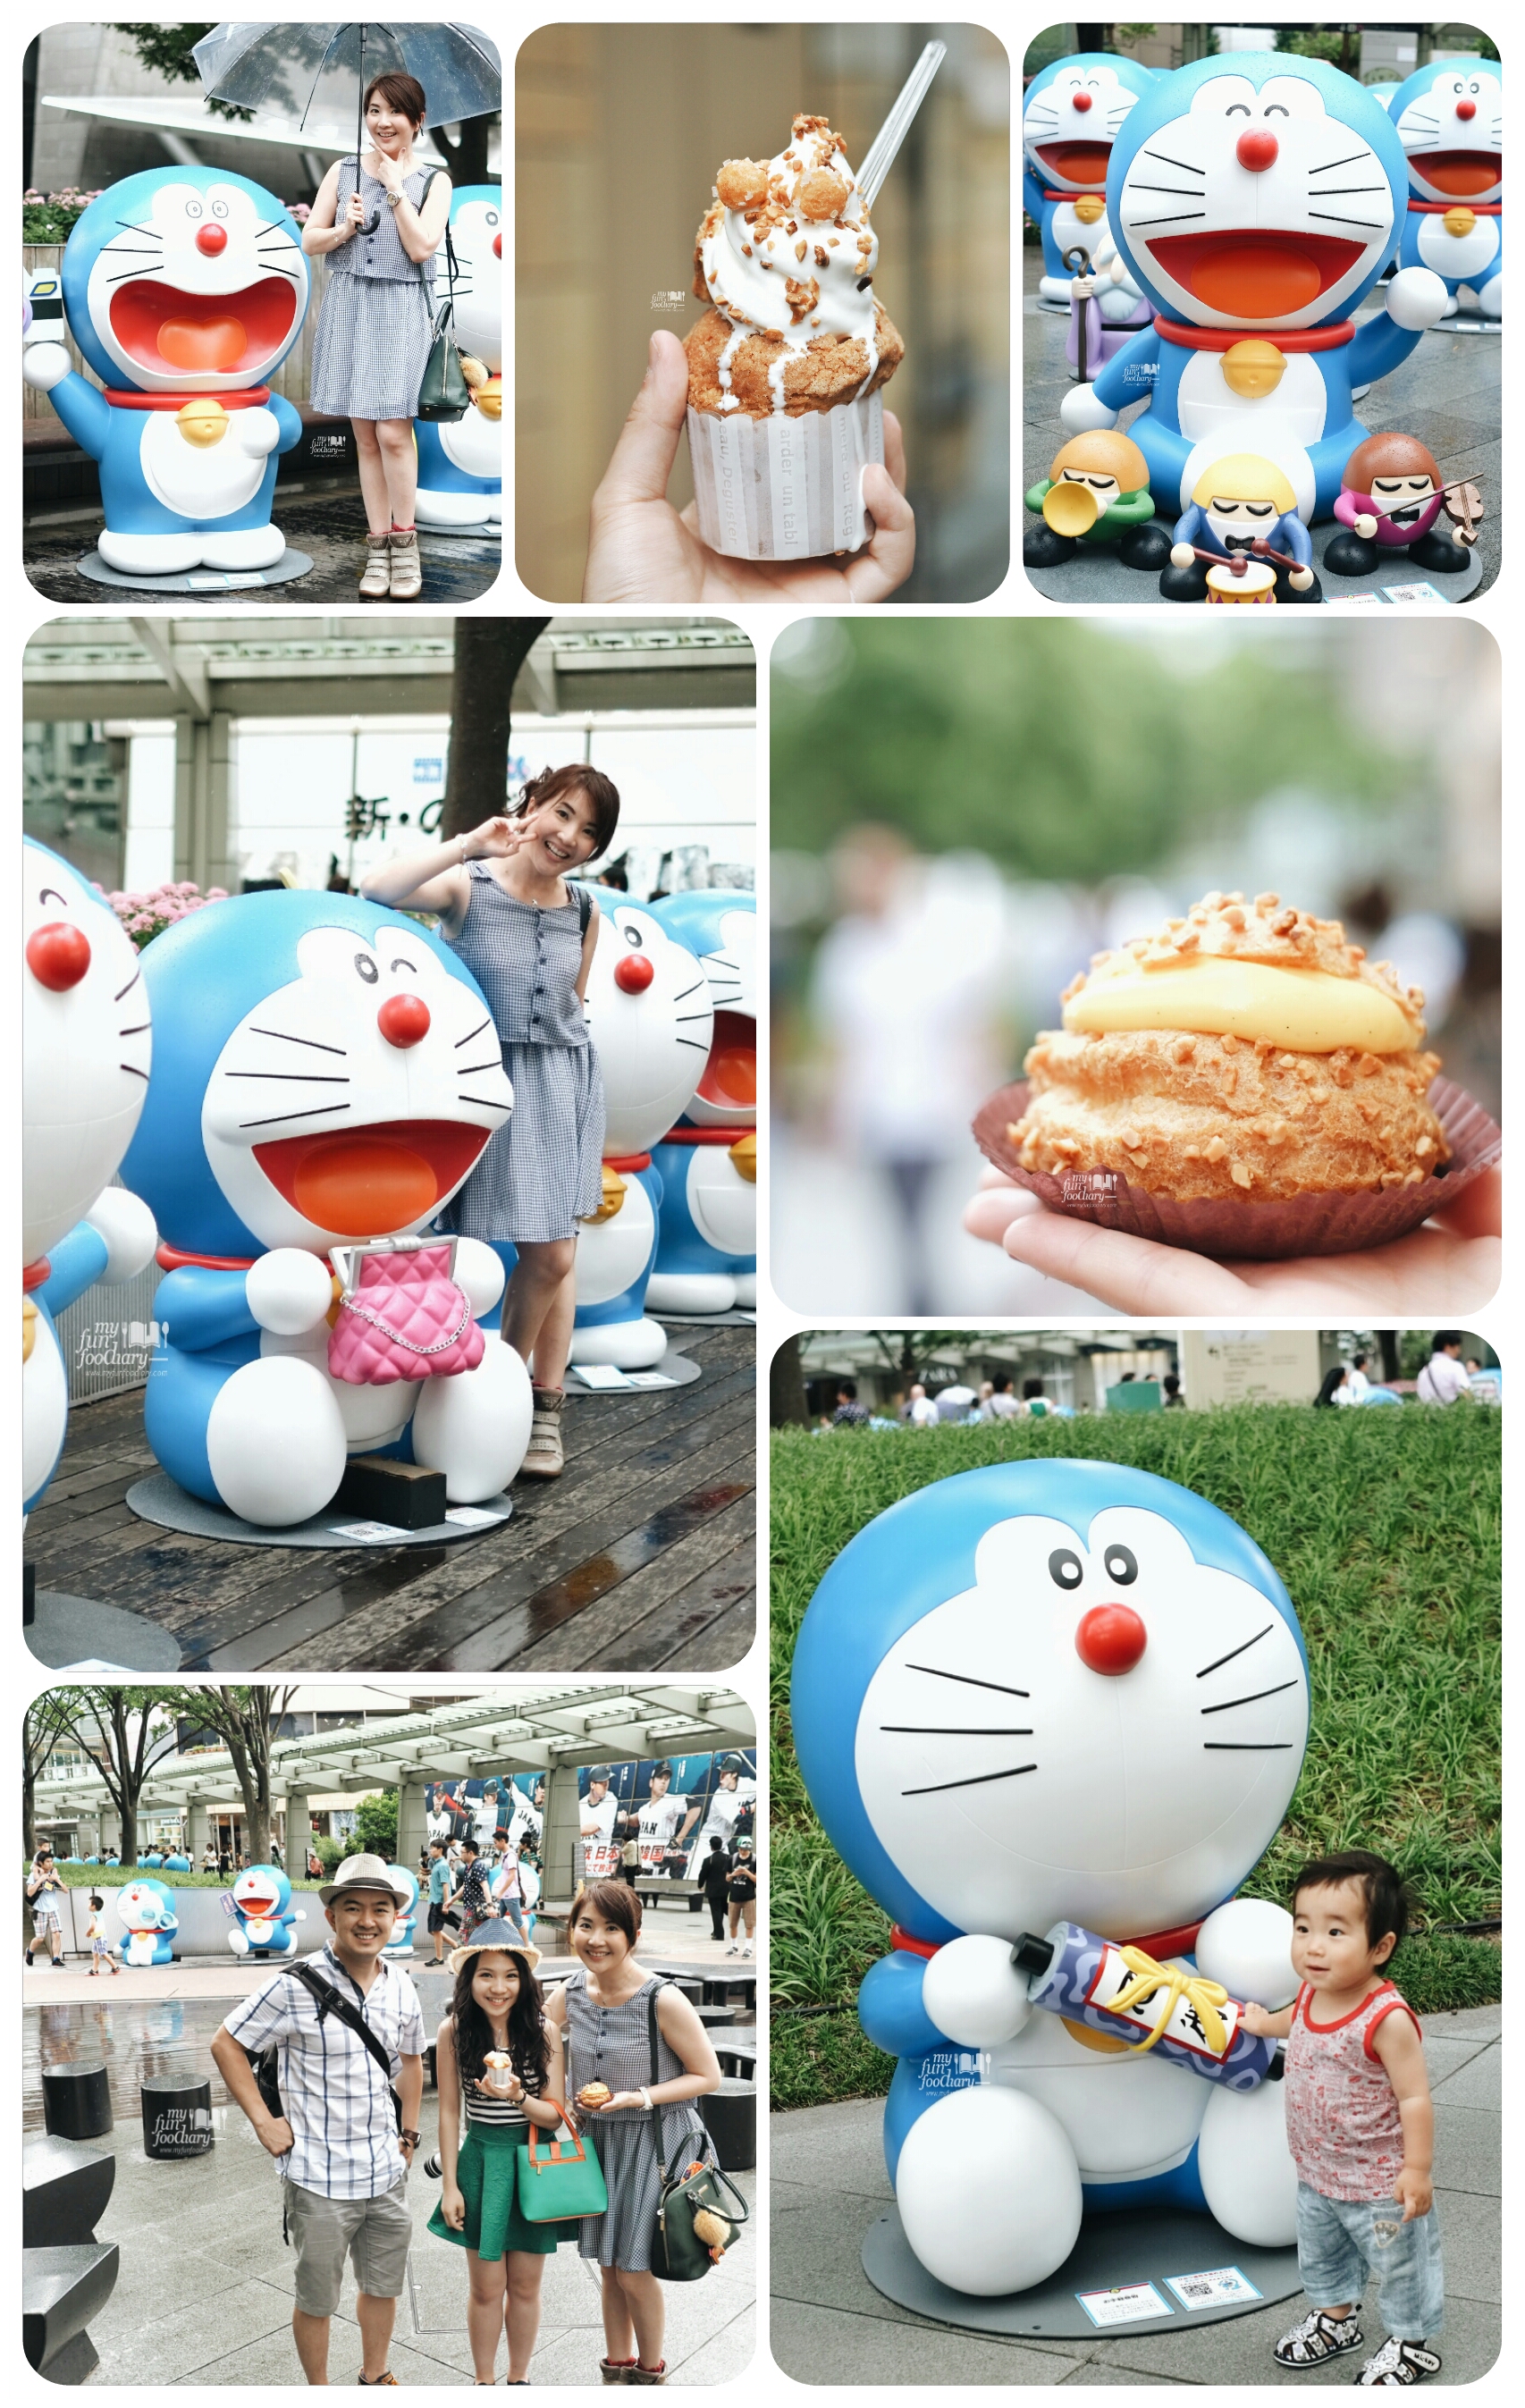 Doraemon Figure at Roppongi Hills by Myfunfoodiary